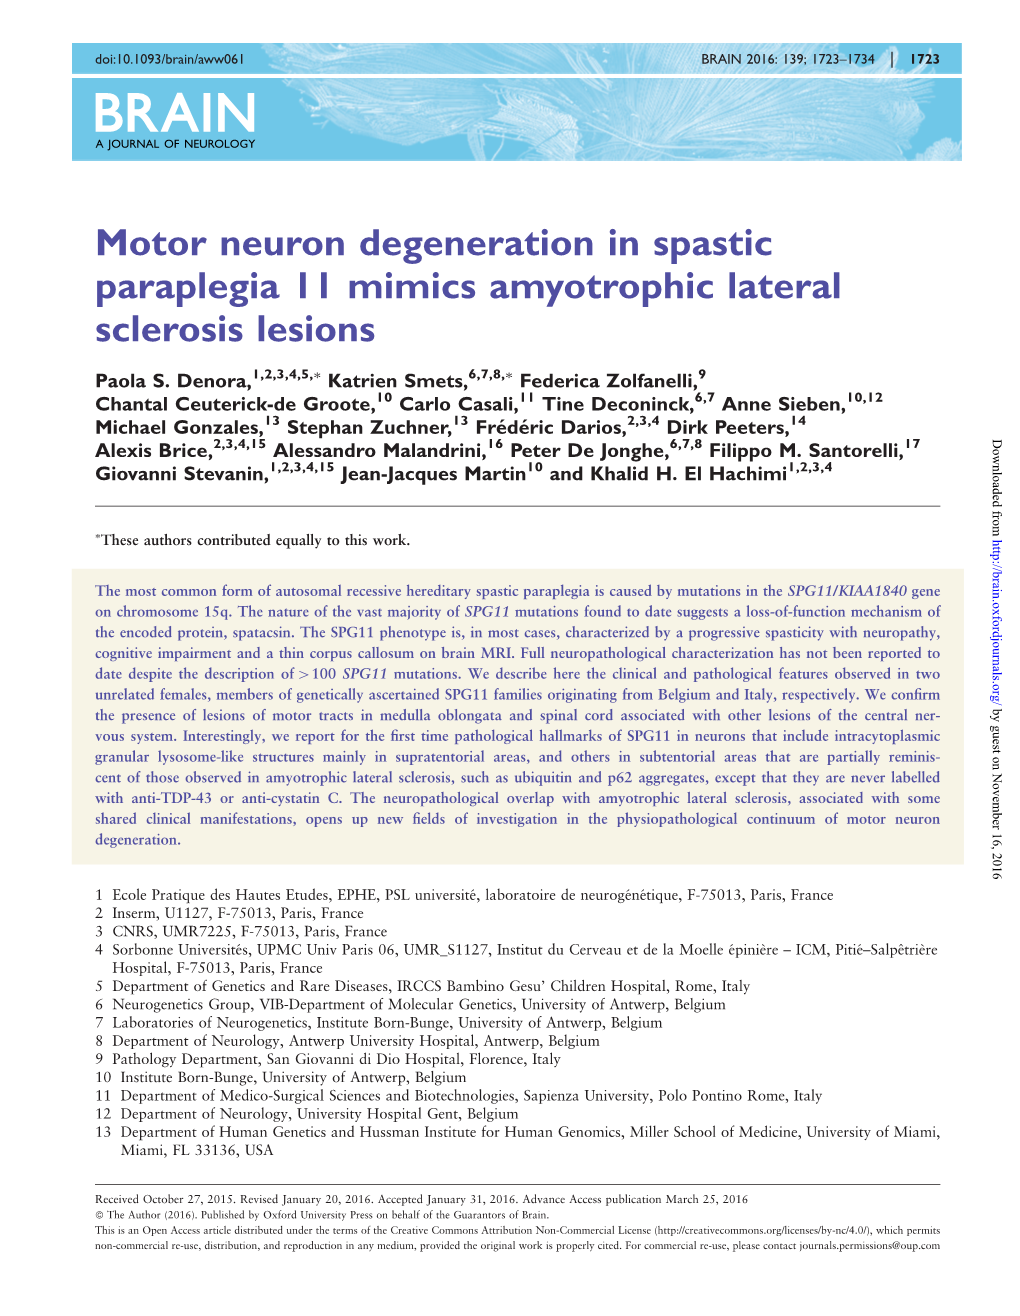 Motor Neuron Degeneration in Spastic Paraplegia 11 Mimics Amyotrophic Lateral Sclerosis Lesions